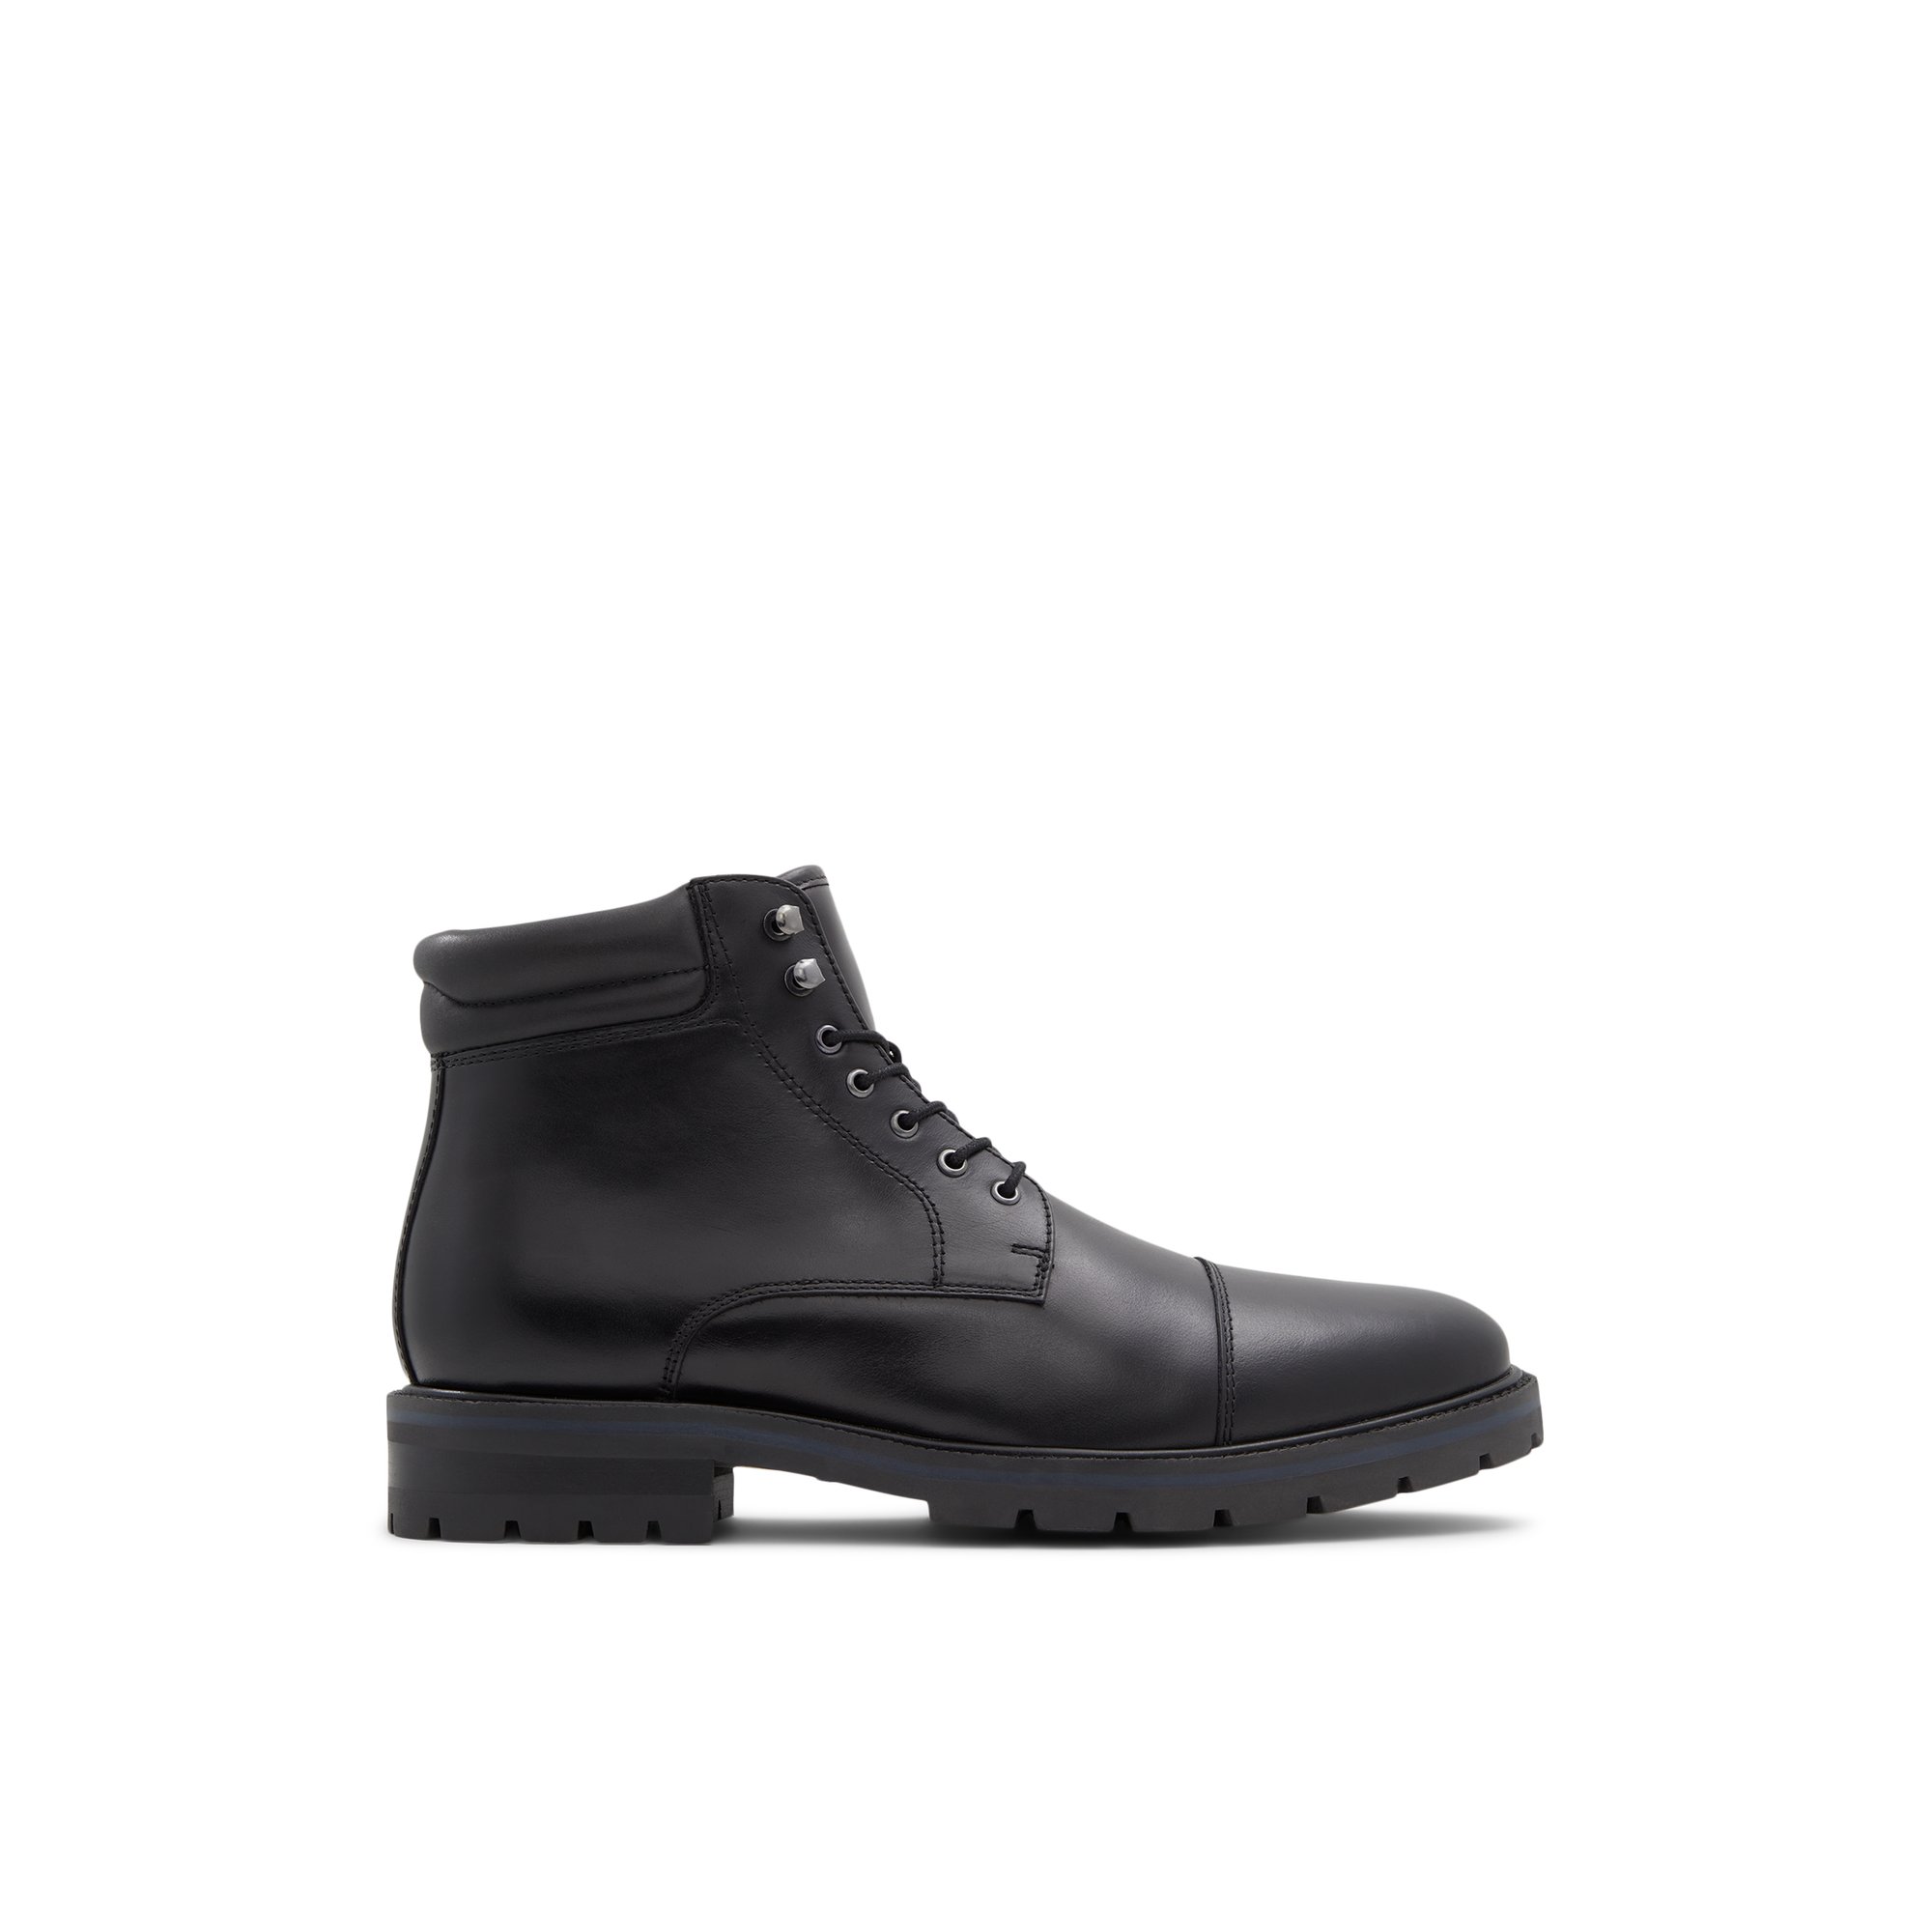 ALDO Avior-l - Men's Boots Casual - Black